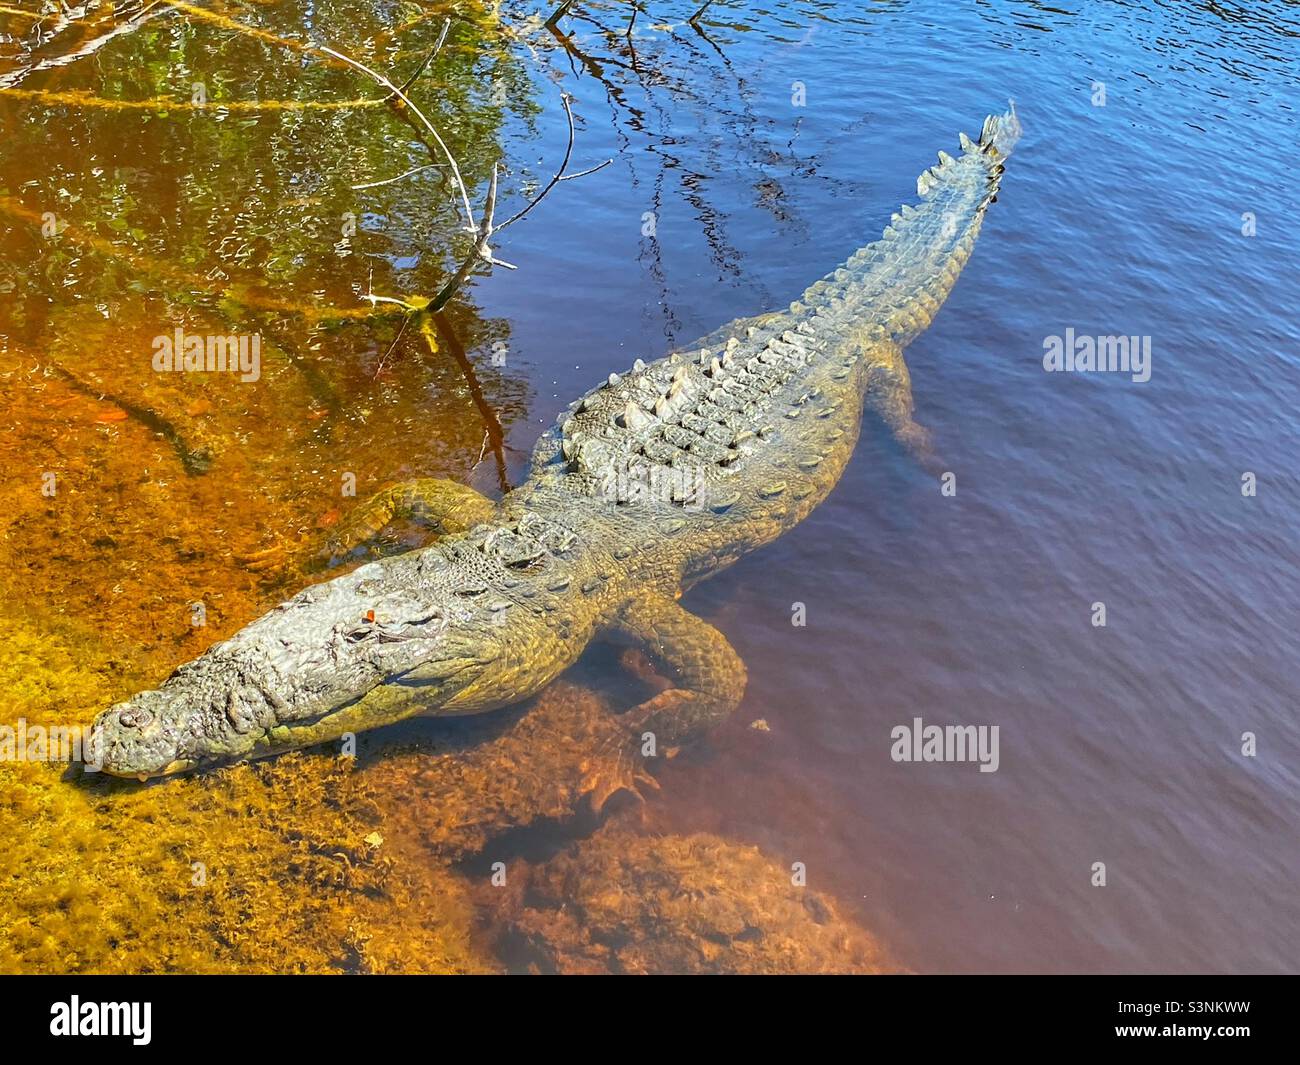 Crocodile in Everglades National park Stock Photo